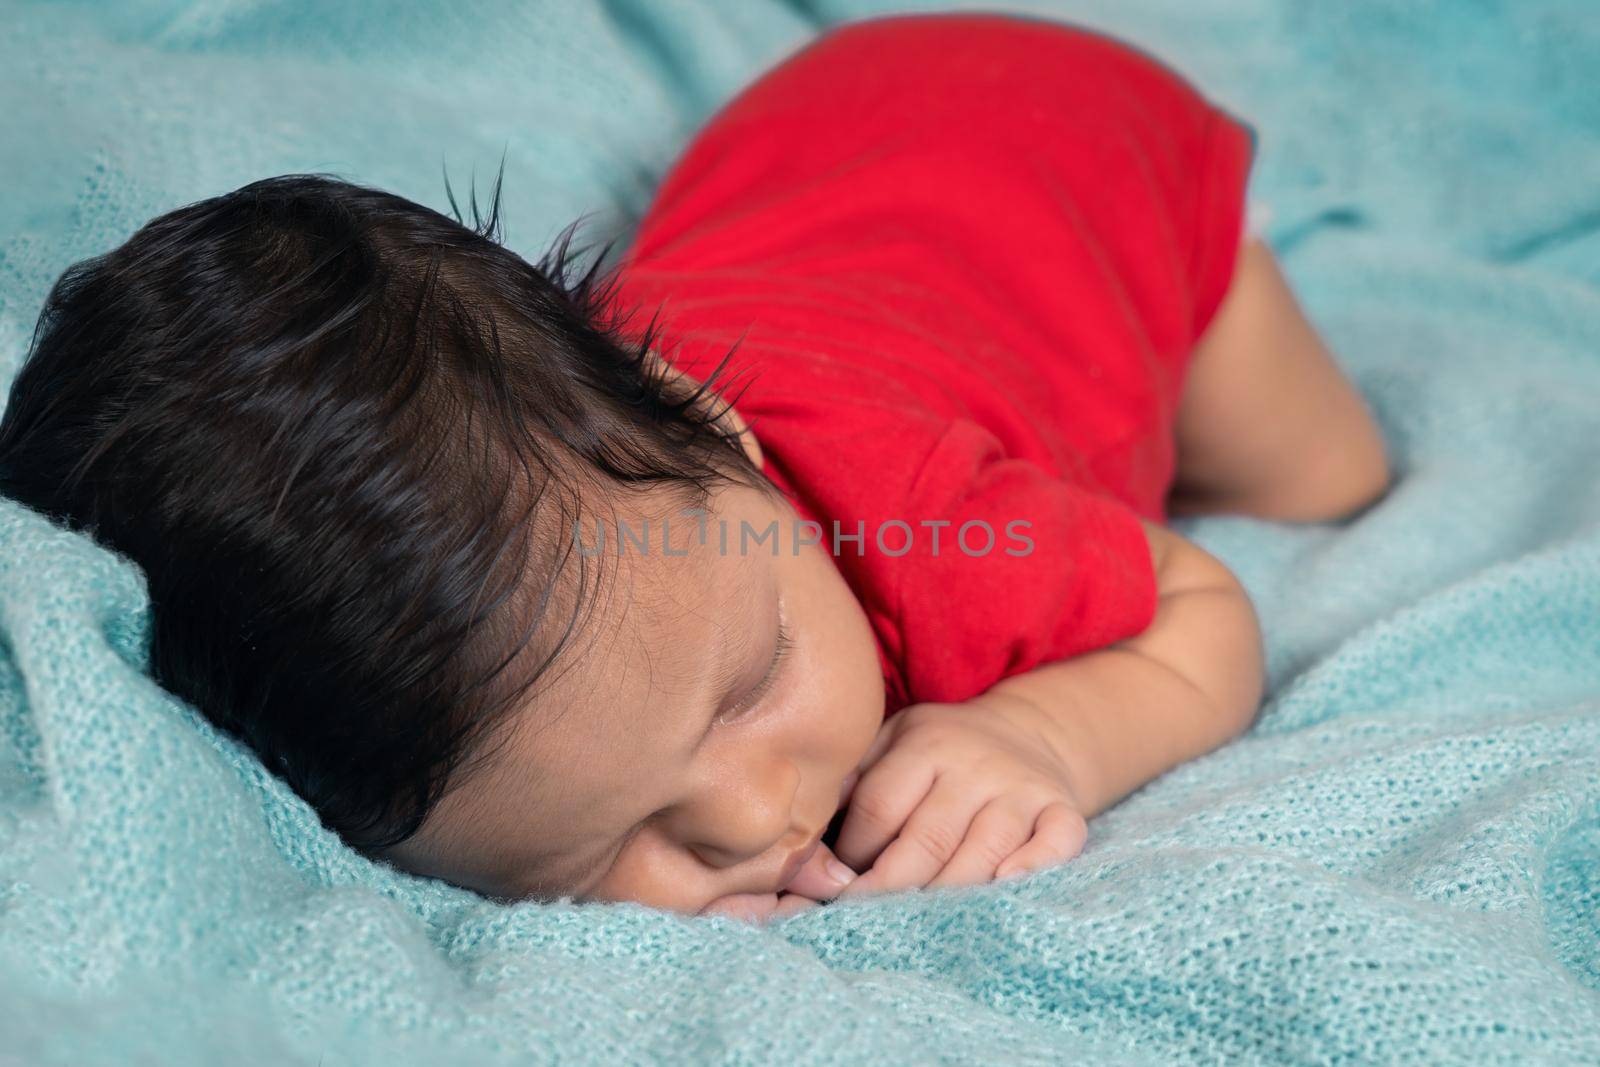 Sleeping baby by jrivalta